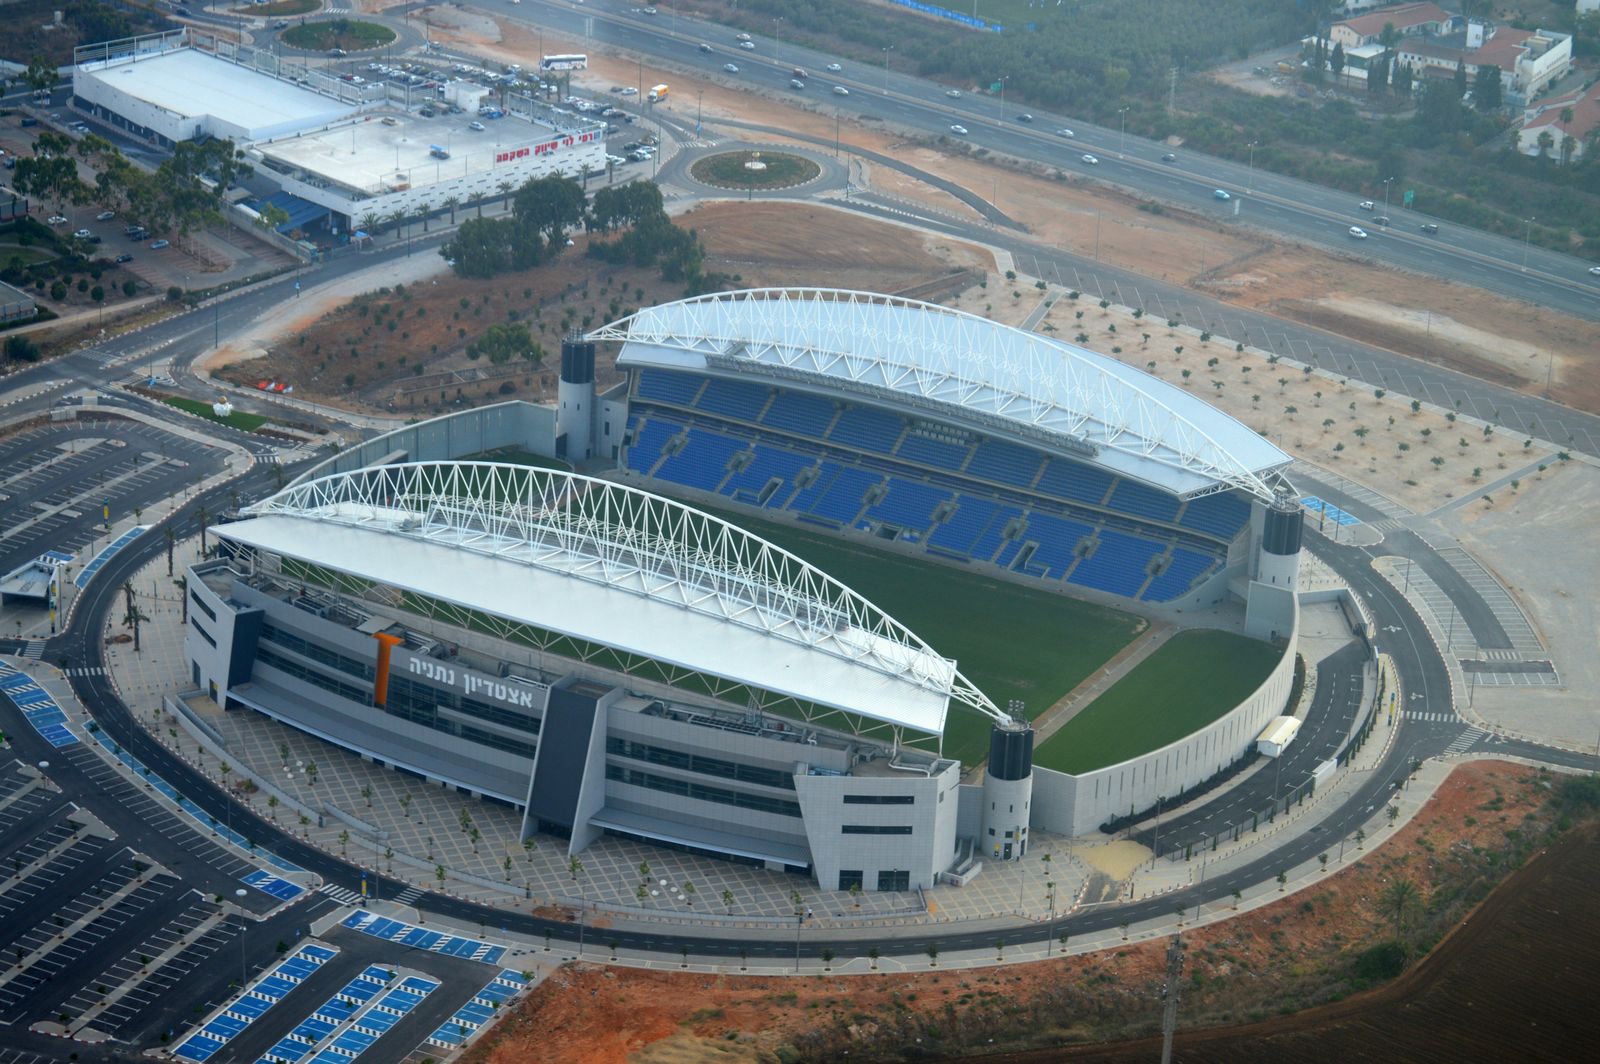 http://stadiumdb.com/pictures/stadiums/isr/netanya_stadium/netanya_stadium09.jpg